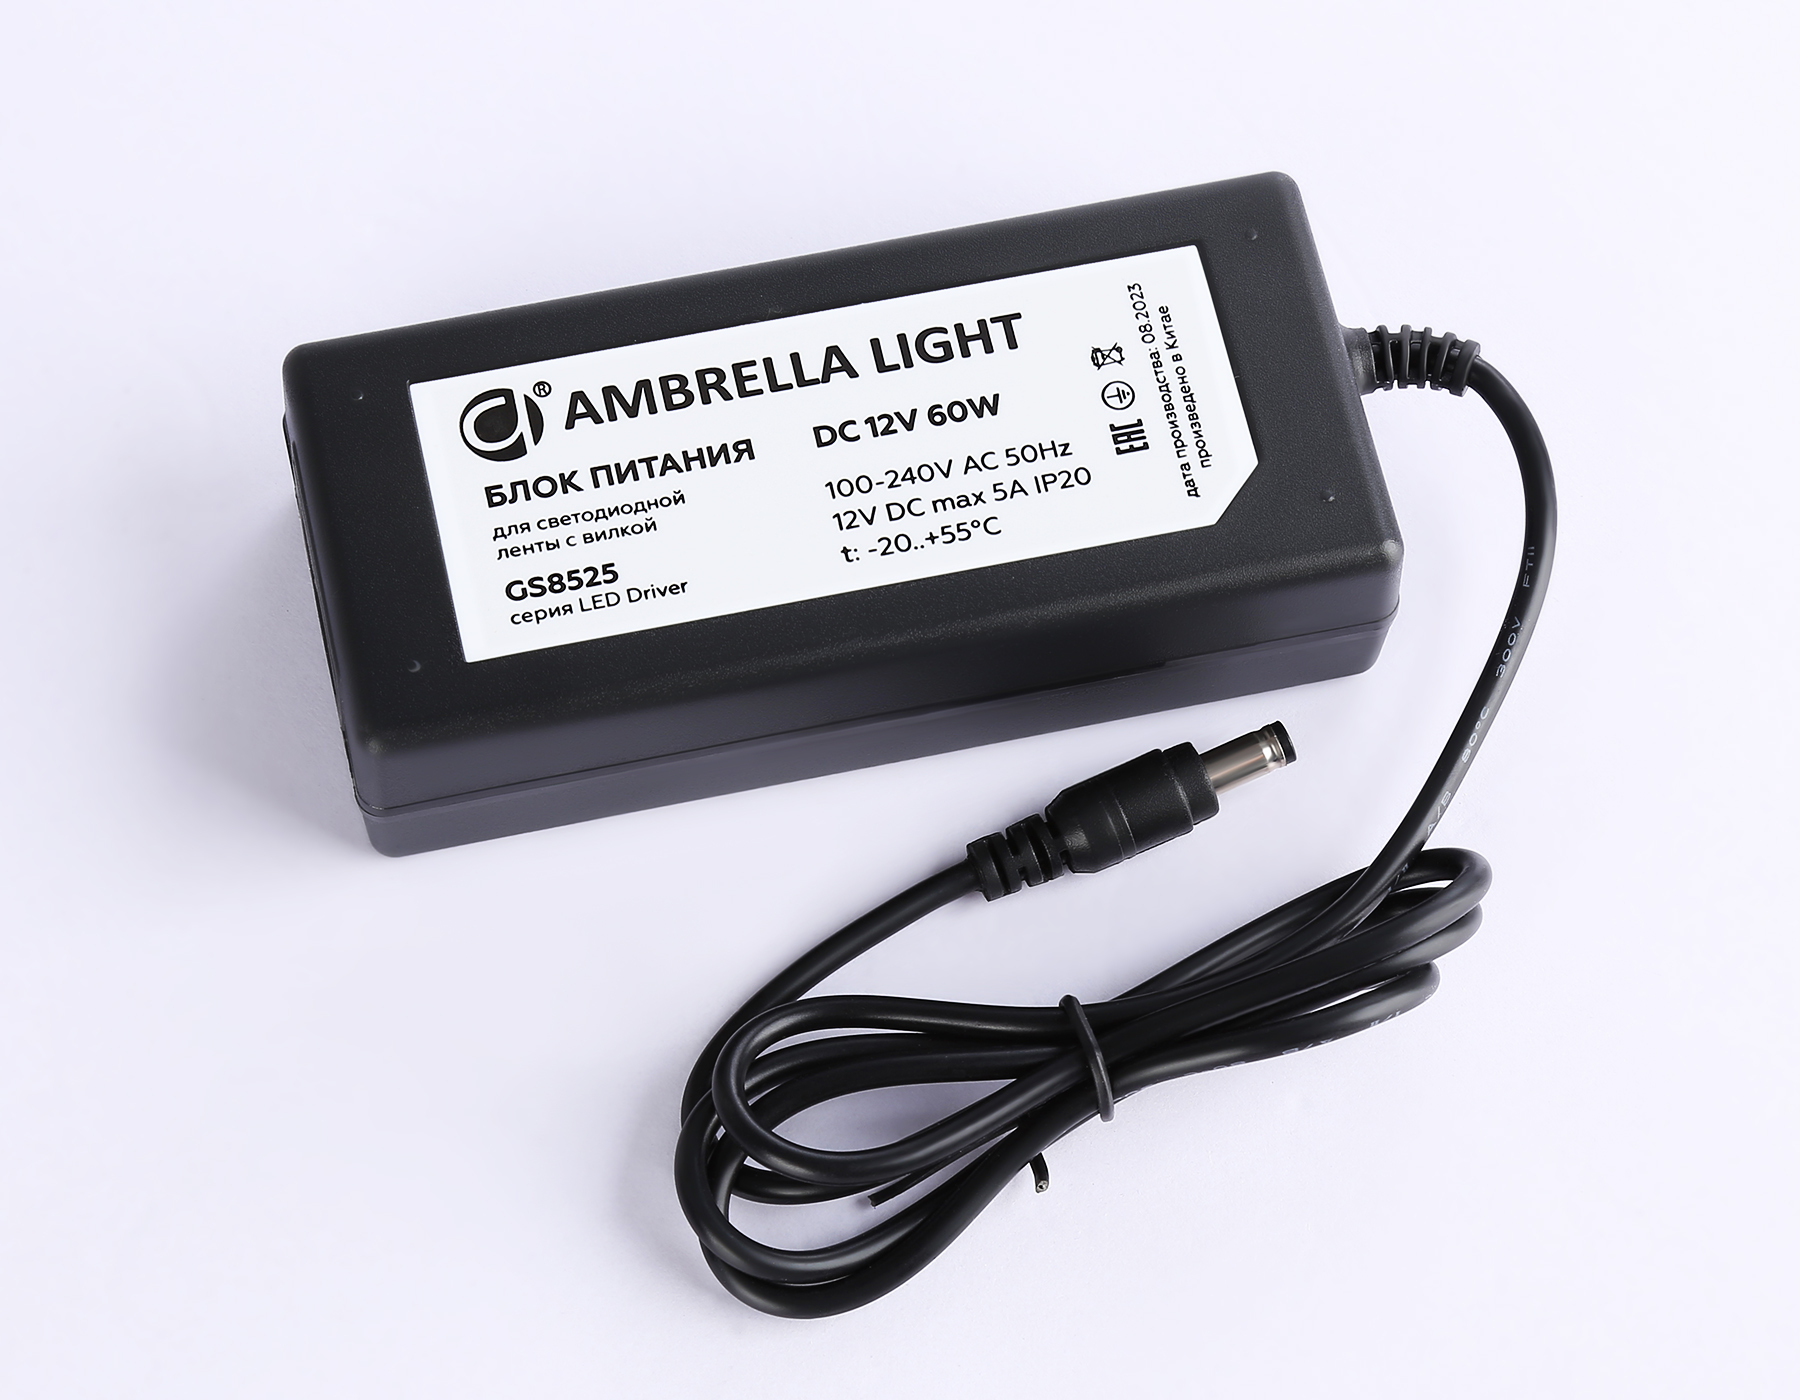 Блок питания LED DRIVER 12V 5A 60W Ambrella light GS8525, цвет чёрный - фото 3